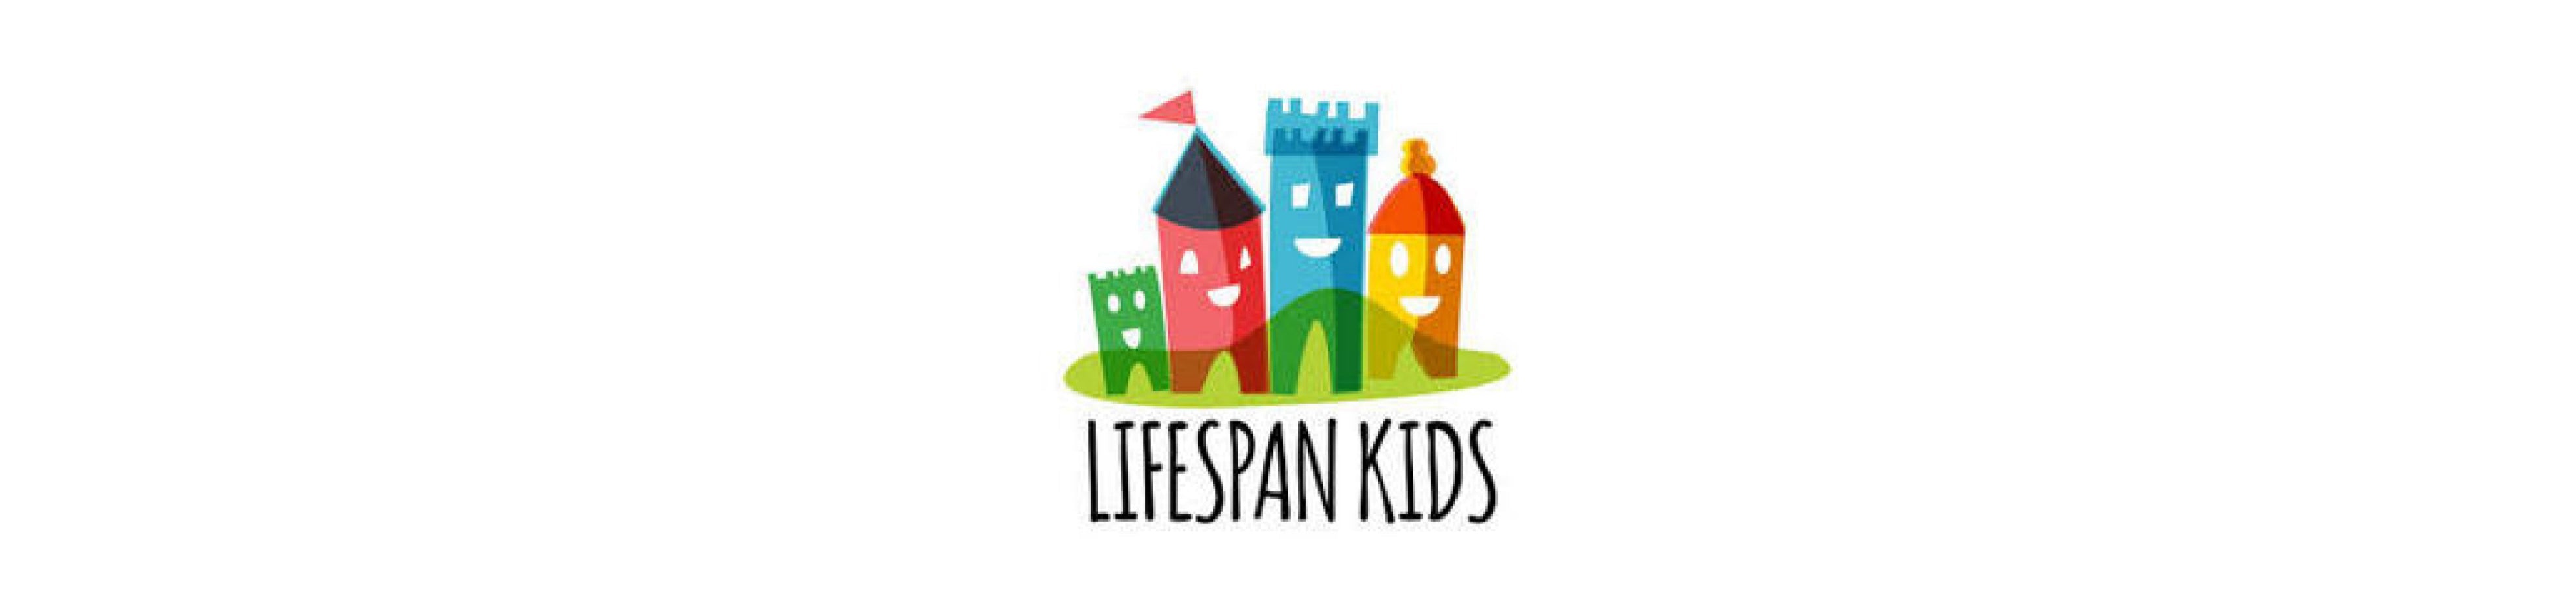 Lifespan Kids Trampoline Swing Set Slide Seesaw Outdoor Play Equipment